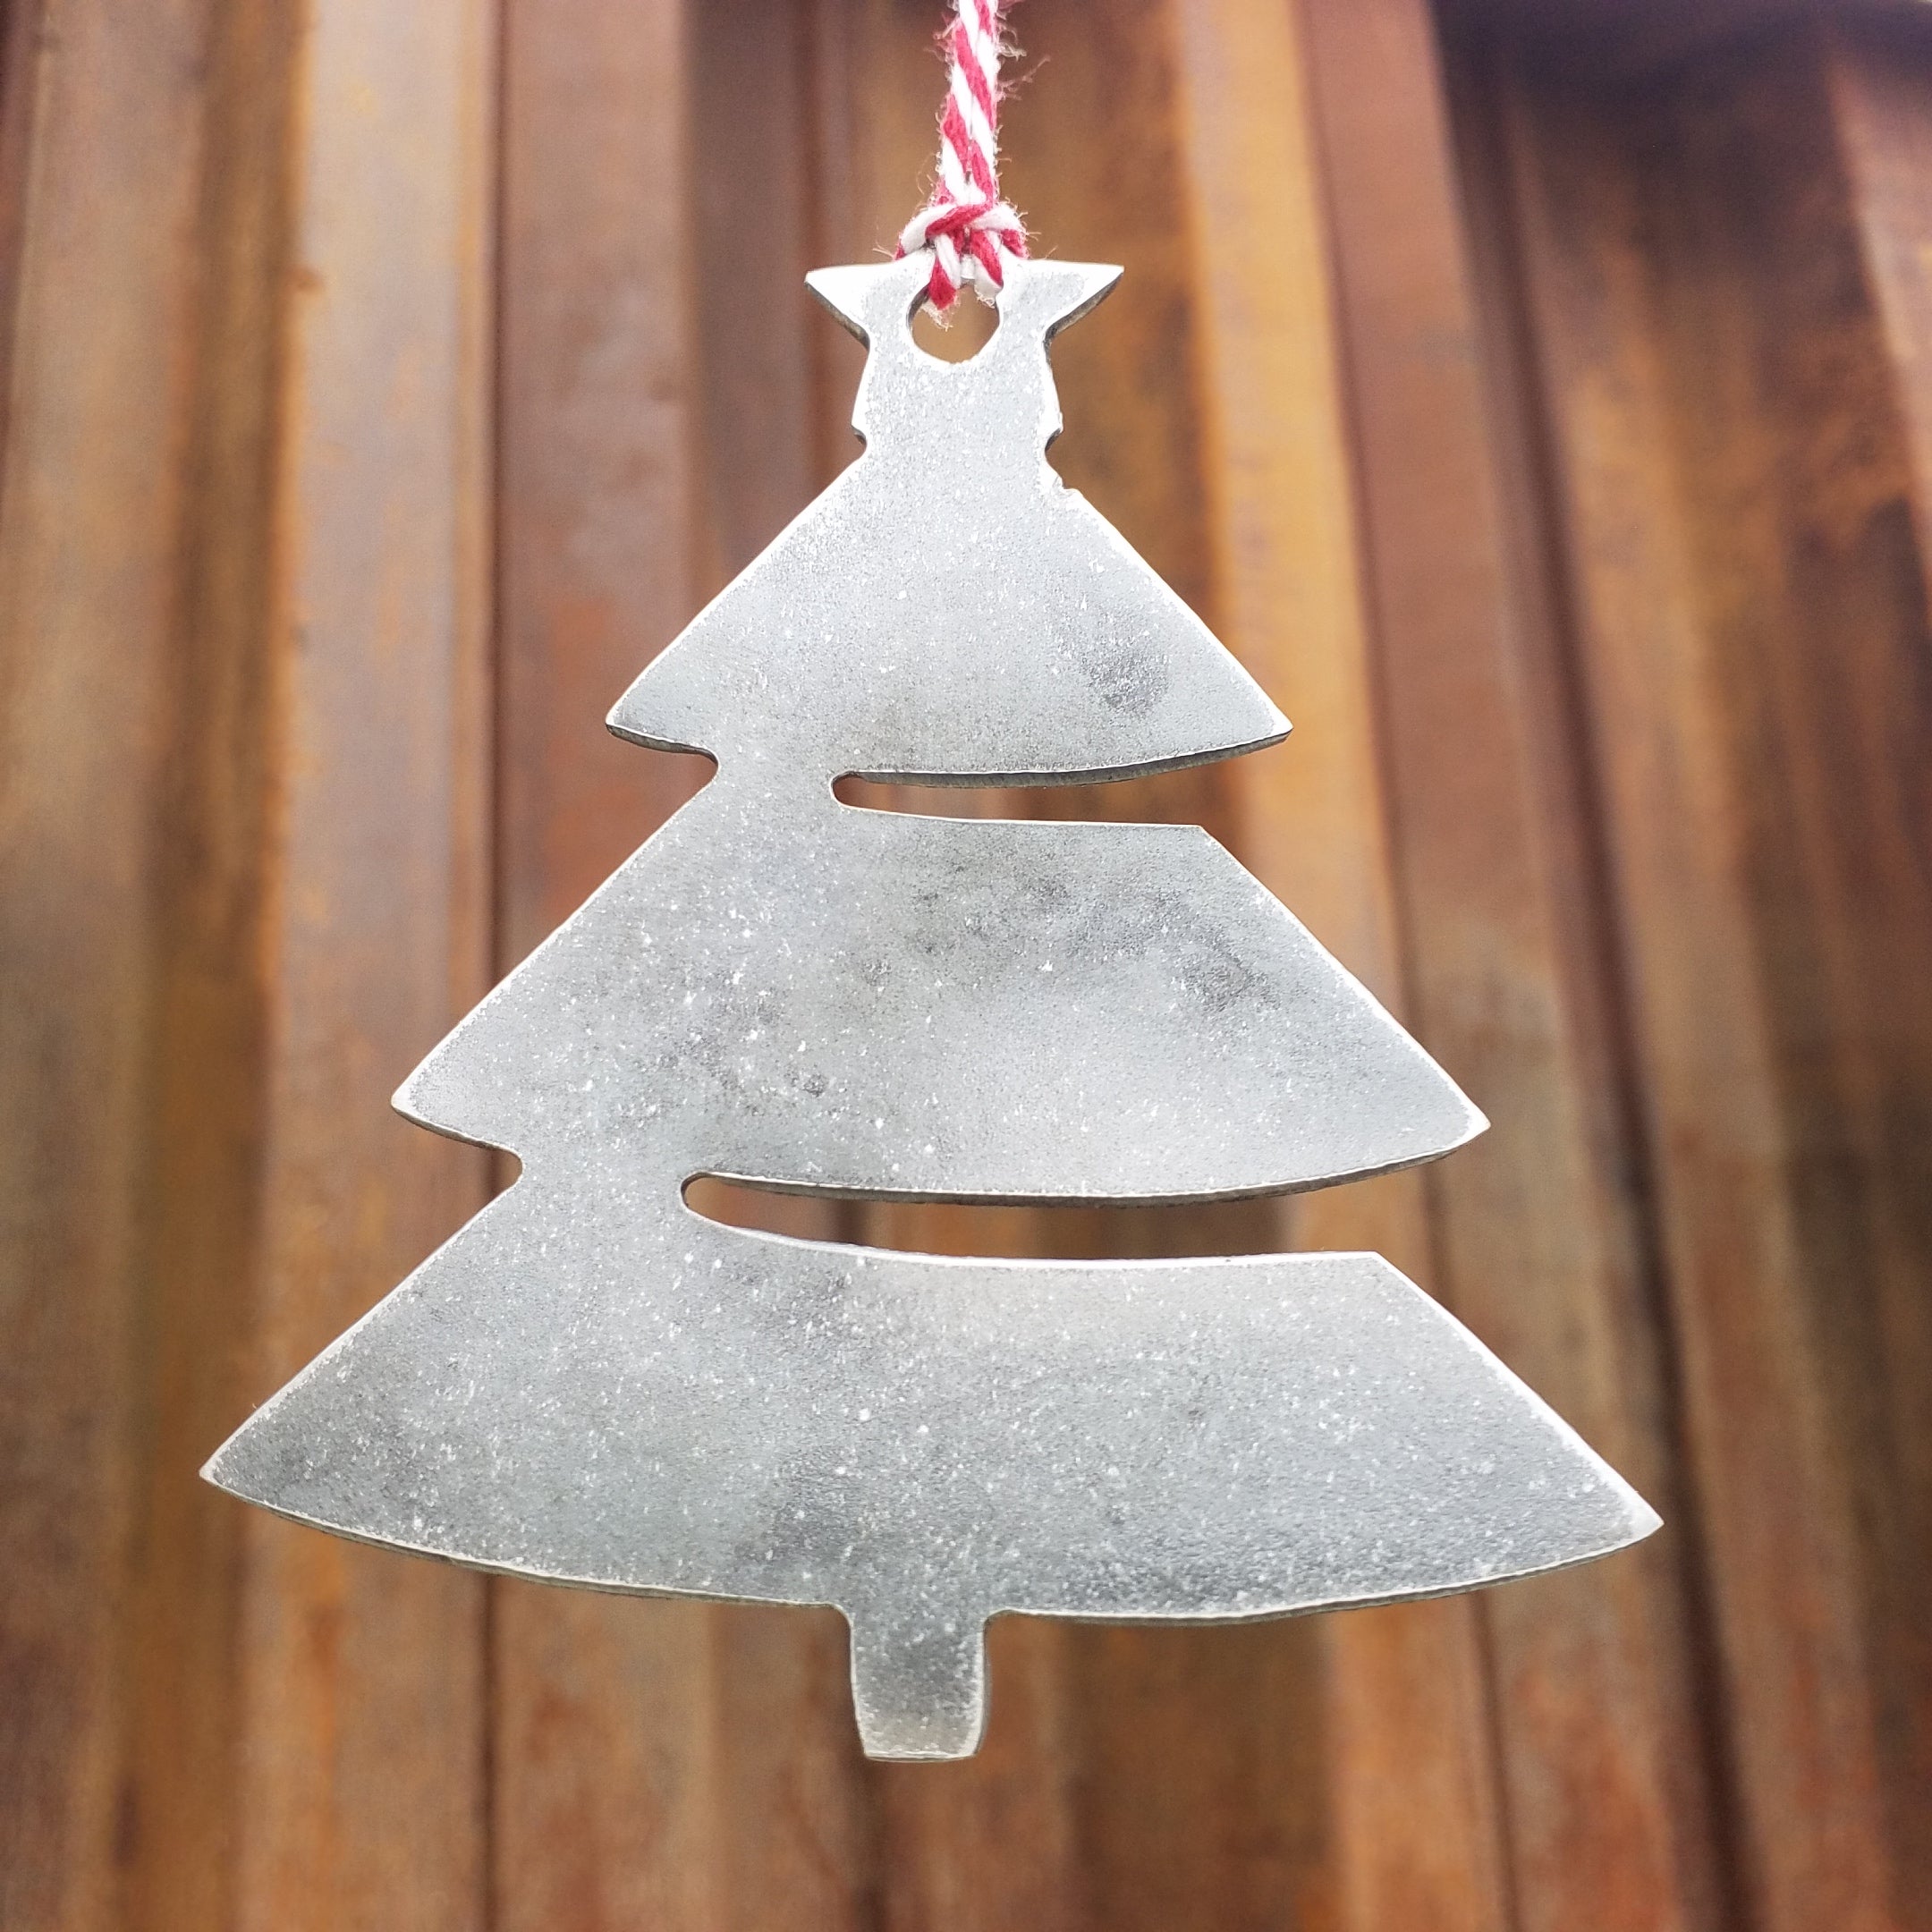 Christmas Tree Ornament - FREE SHIPPING, Stocking Stuffer, Holiday Gift, Tree, Star